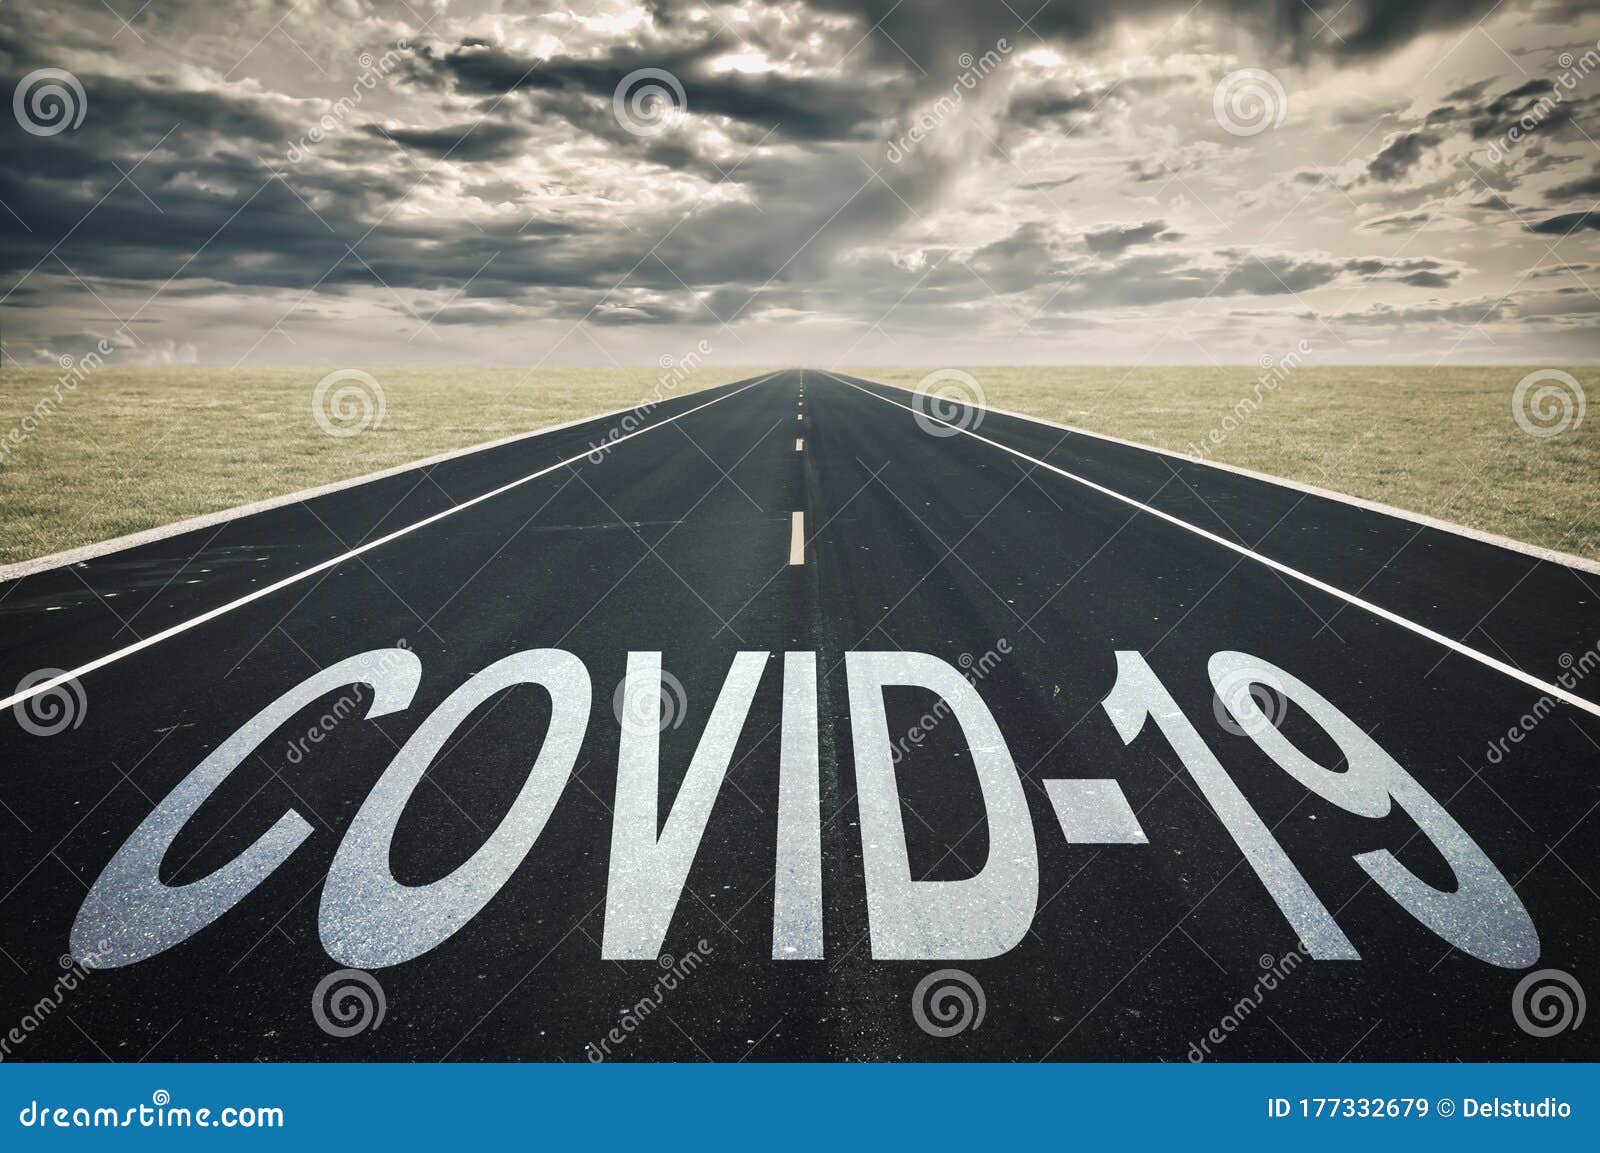 covid-19 written on a road, dark clouds, coronavirus epidemic concept